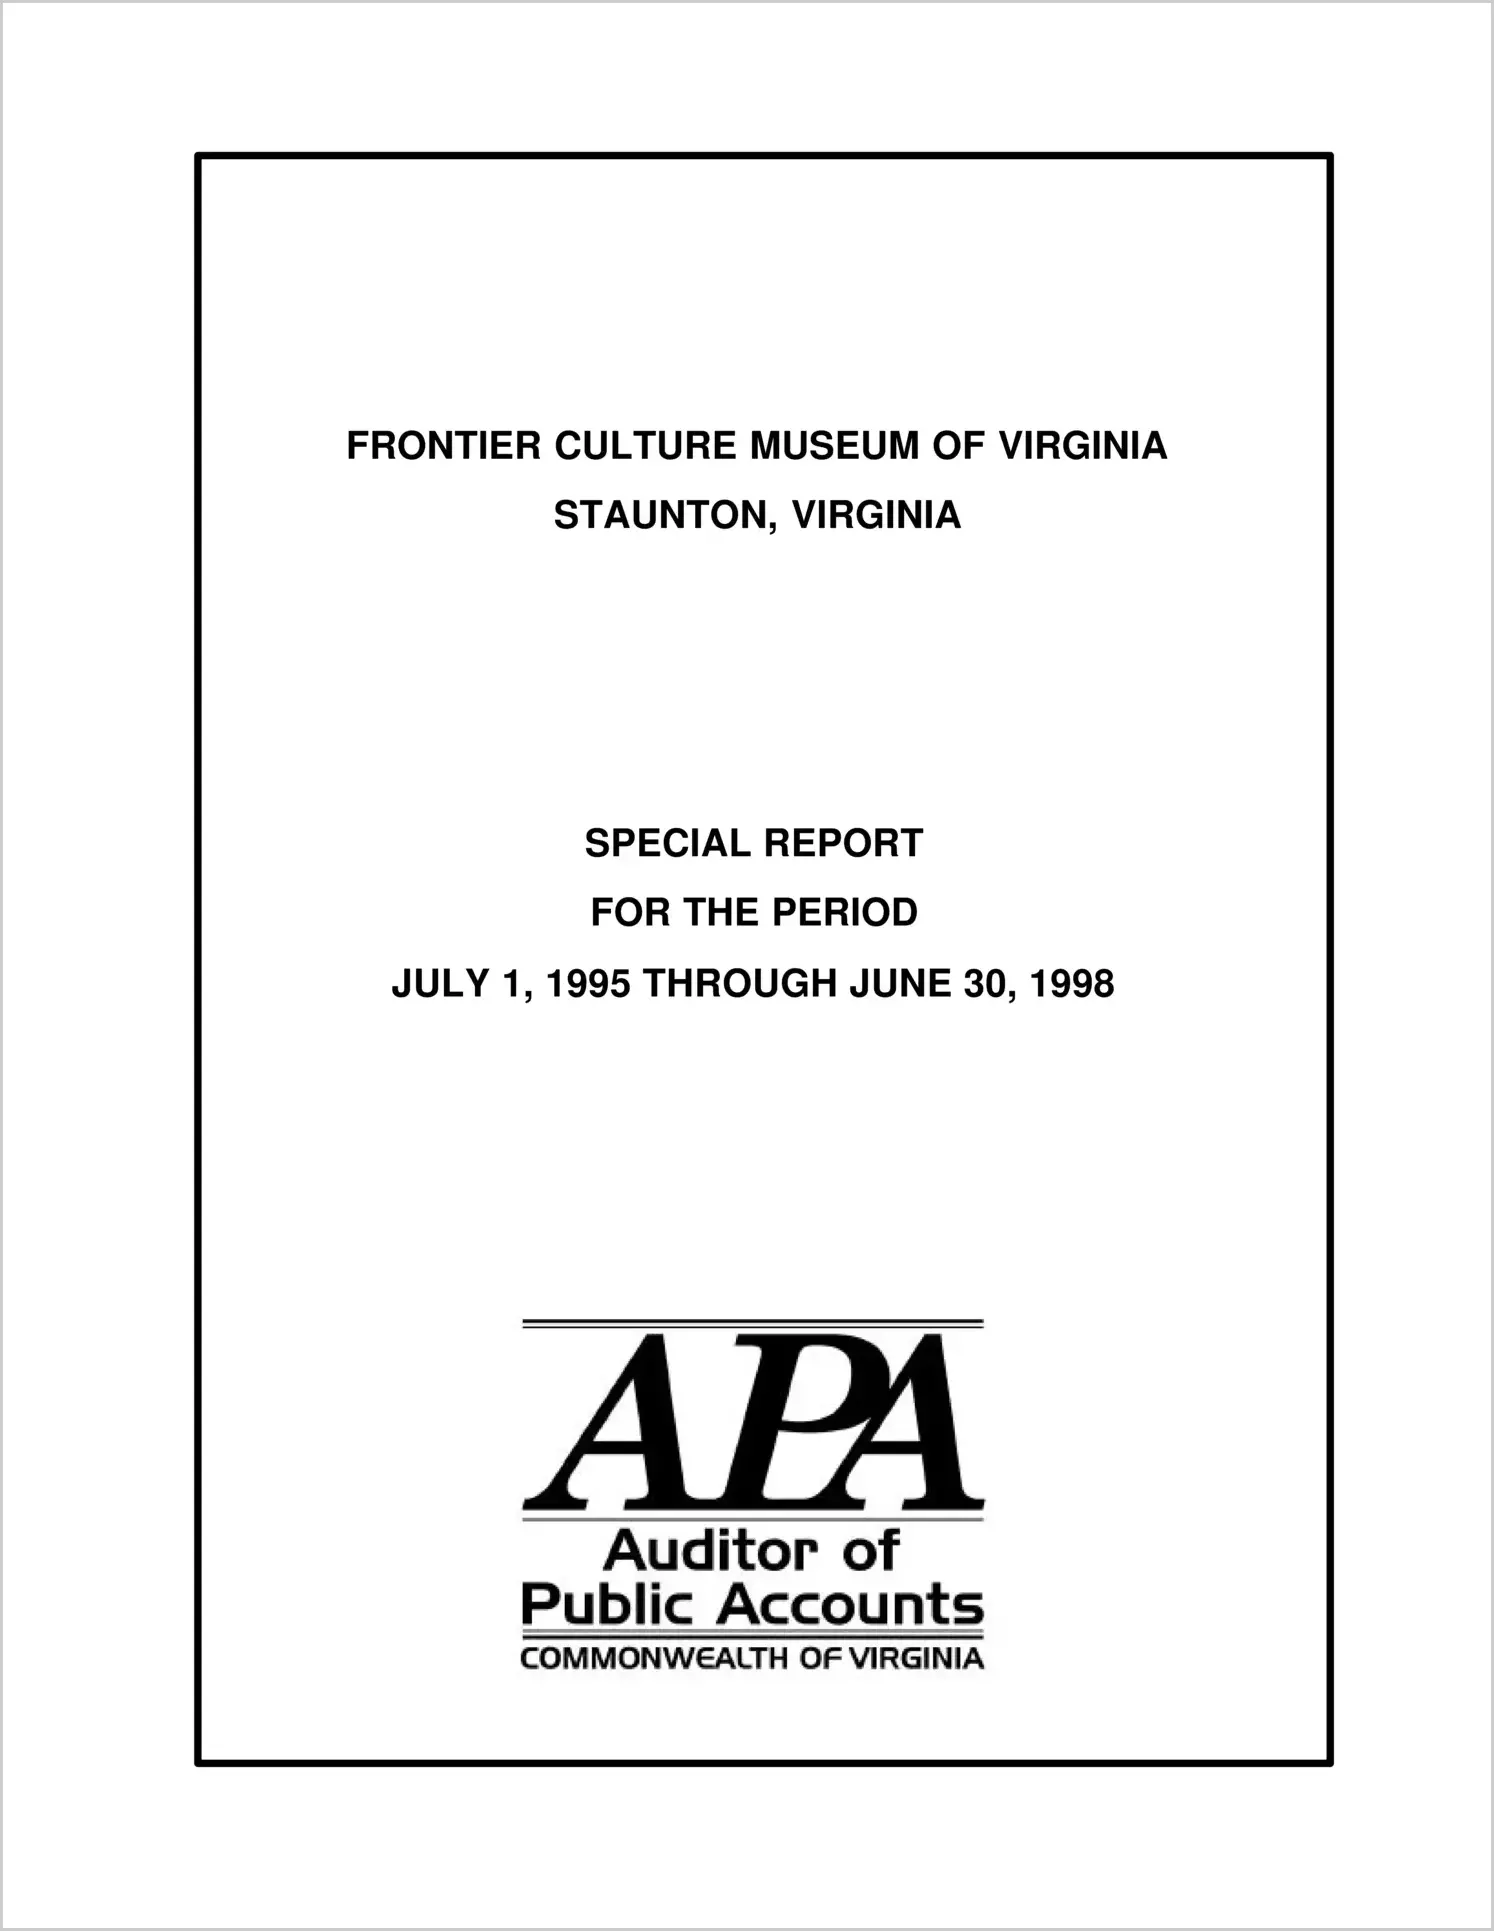 Special Report Frontier Culture Museum of Virginia Special Report(Report Period: 7/1/1995 - 6/30/1998)